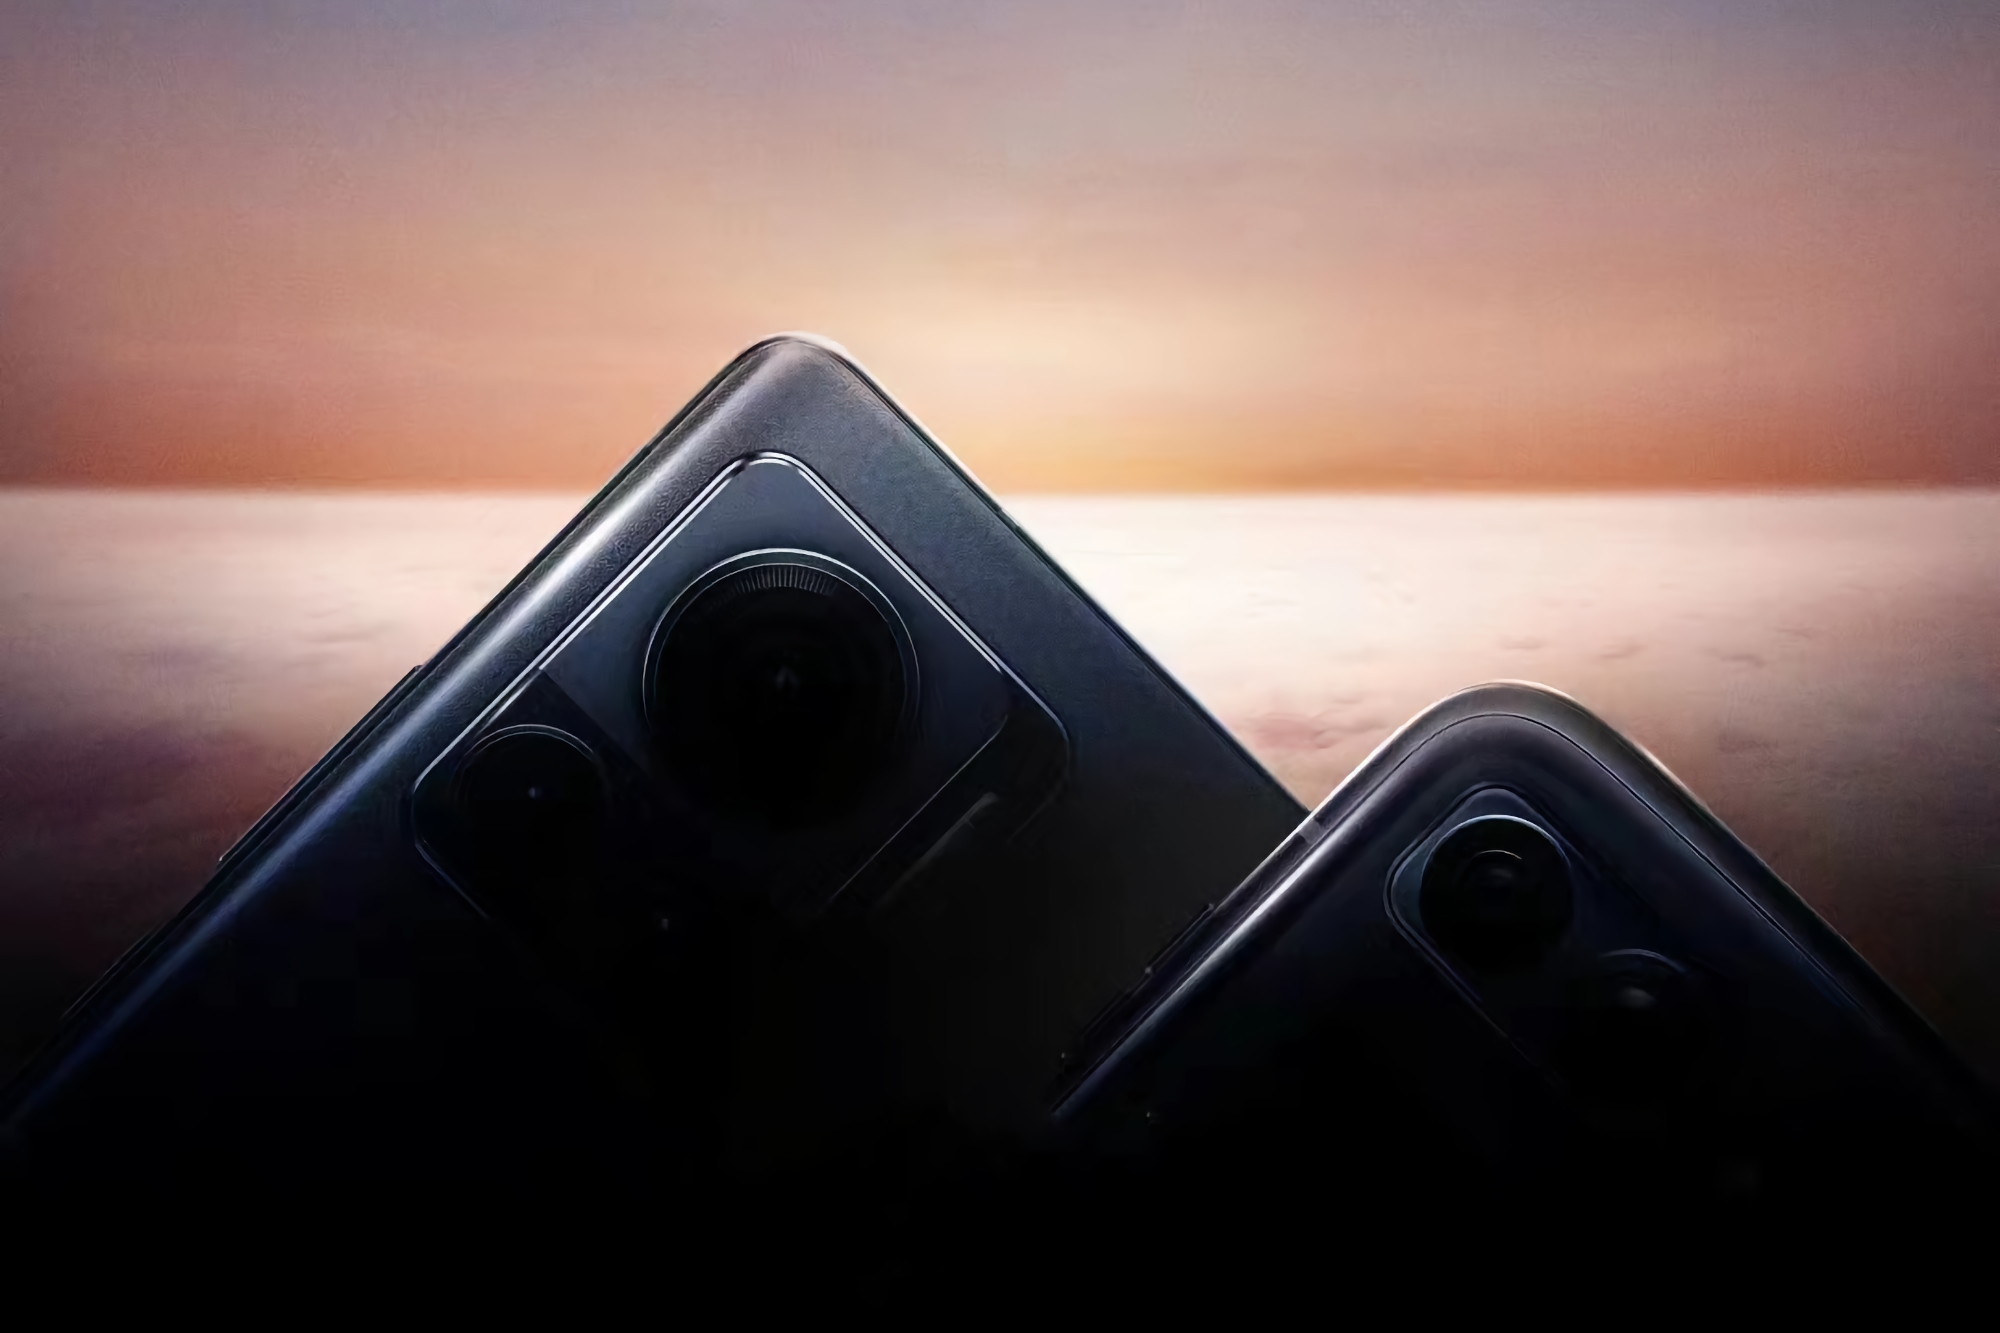 Moto Razr 2022 стане першим складаним смартфоном на ринку з чипом Snapdragon 8+ Gen1